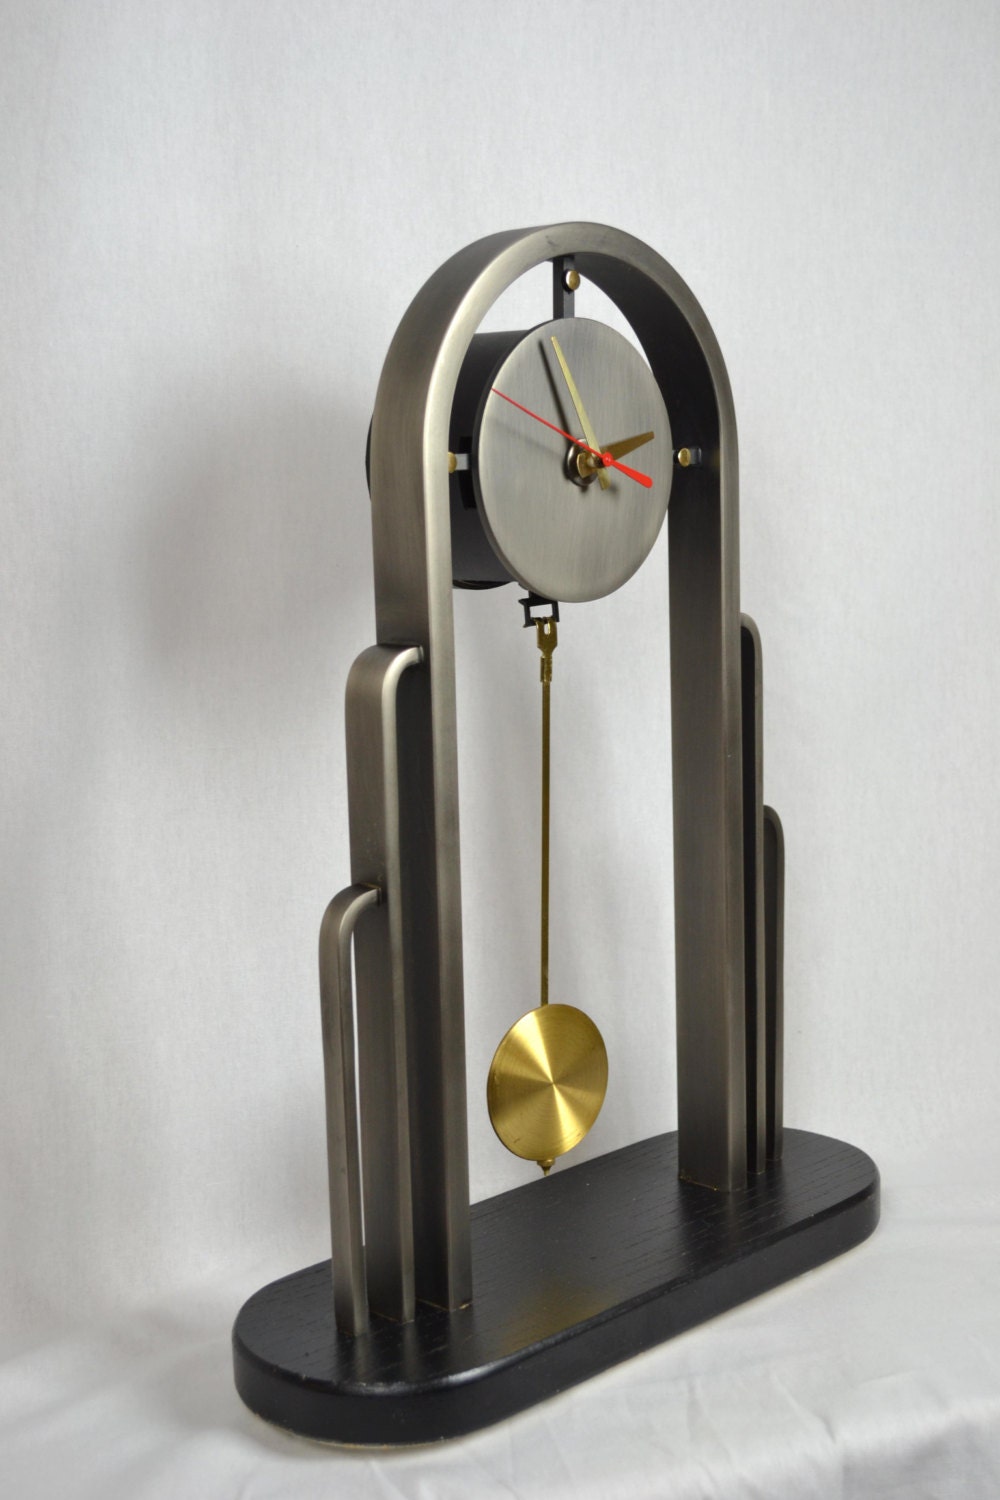 Vintage Modern Mantel Clock | Design Institute of America